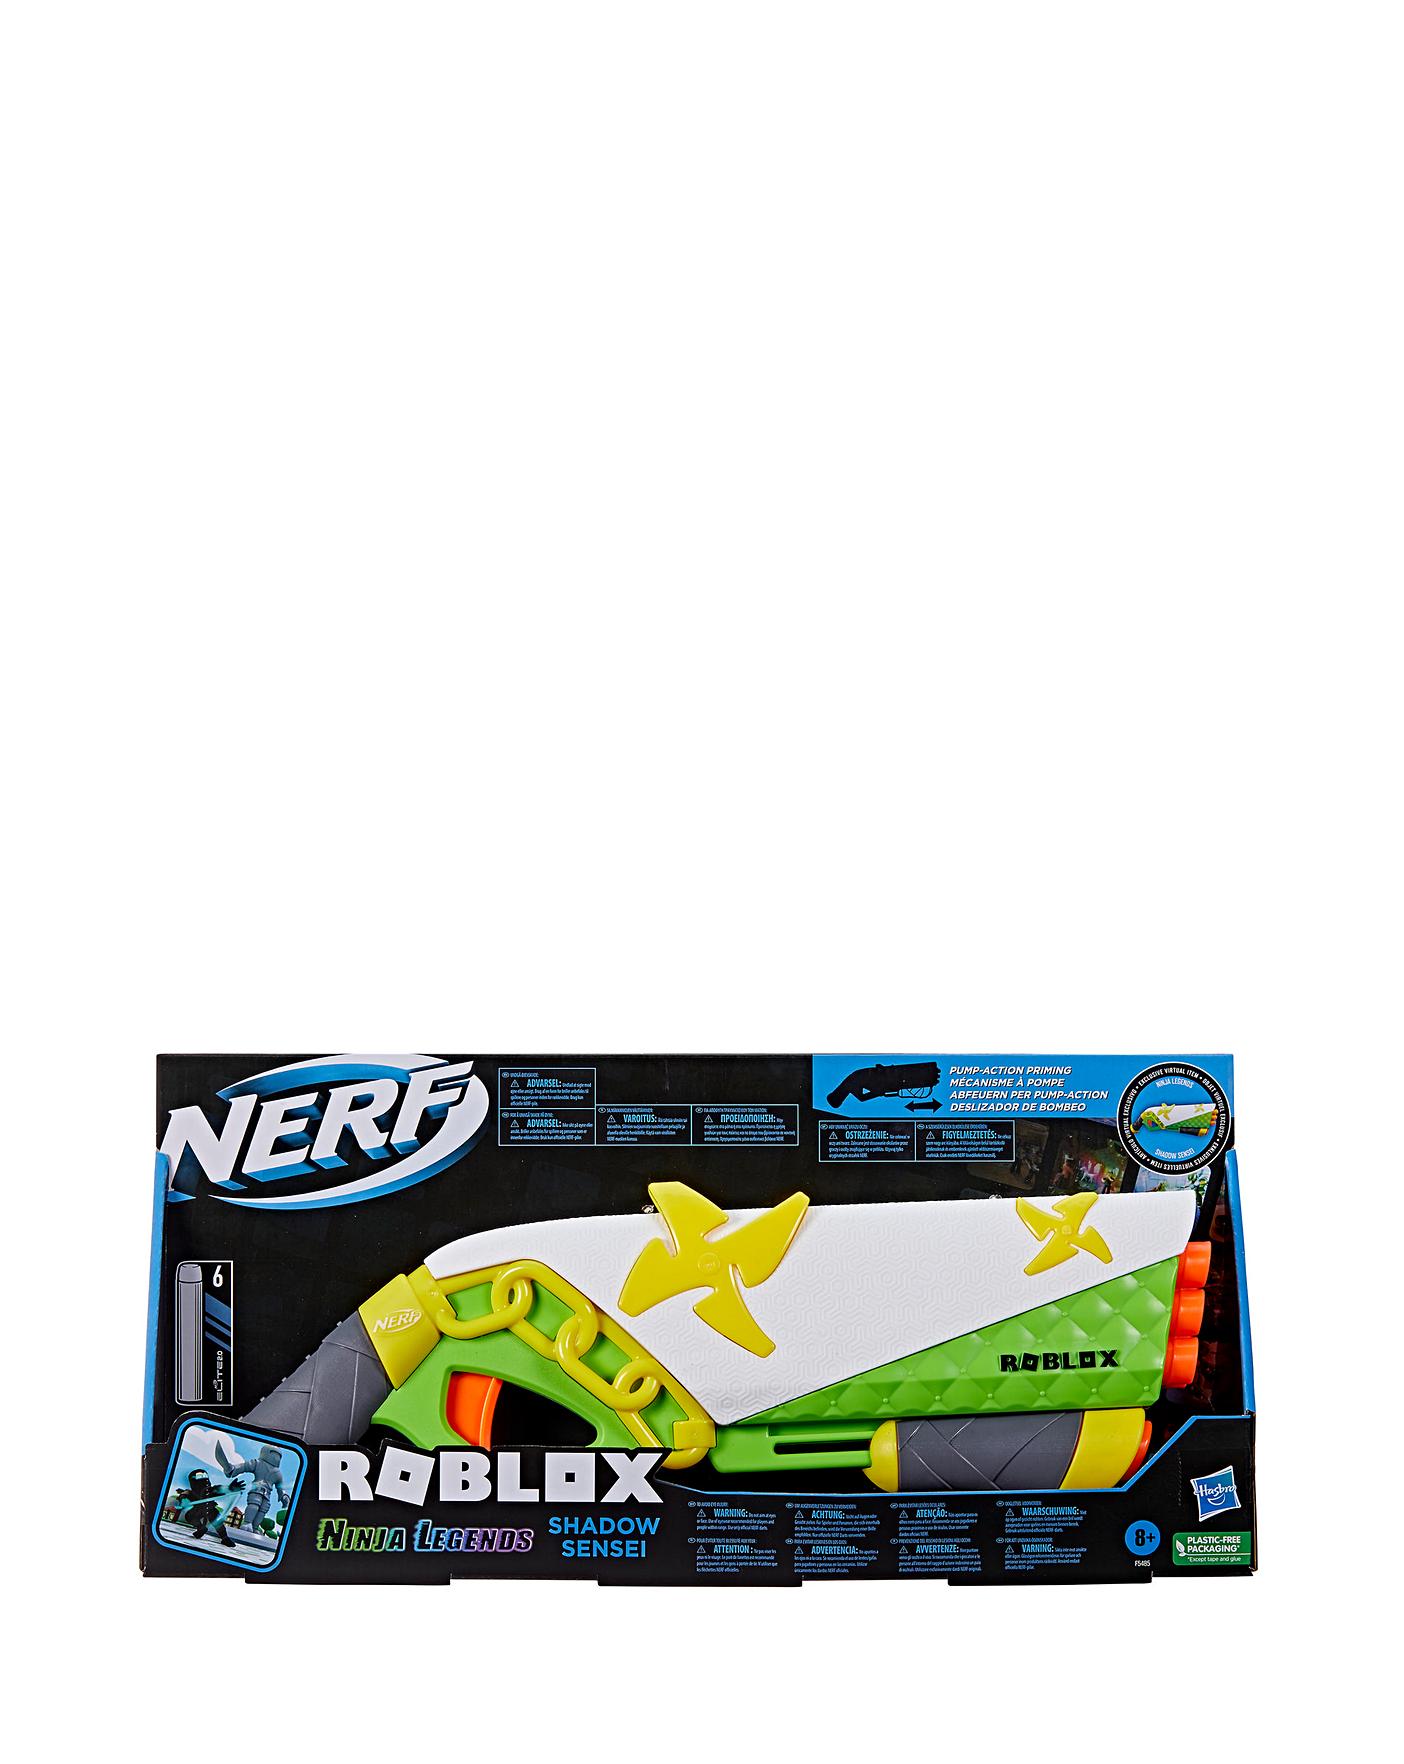 Nerf Roblox Ninja Legends Shadow Sensei Dart Blaster - Smyths Toys 